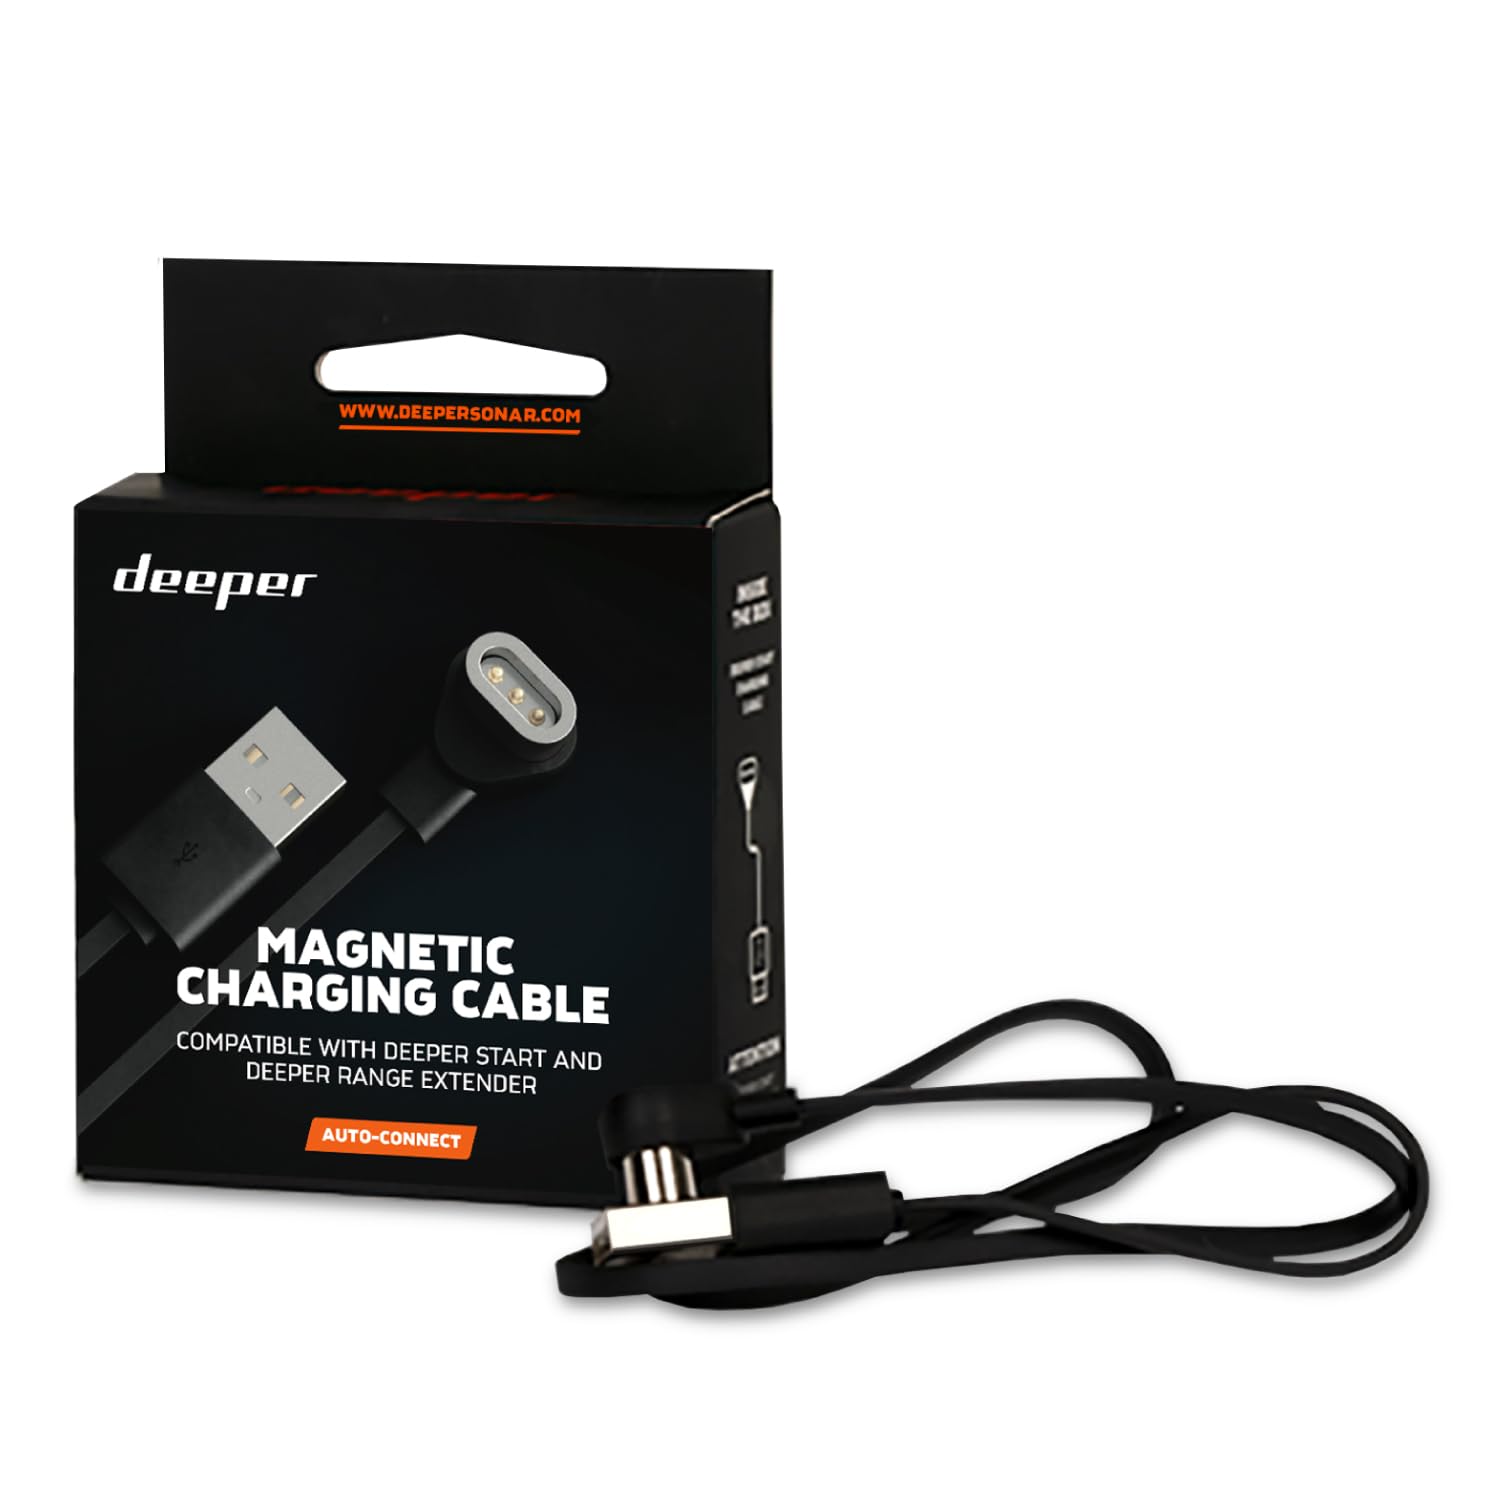 Deeper Magnetic USB Charging Cable Start Smart Sonar Fish Finder